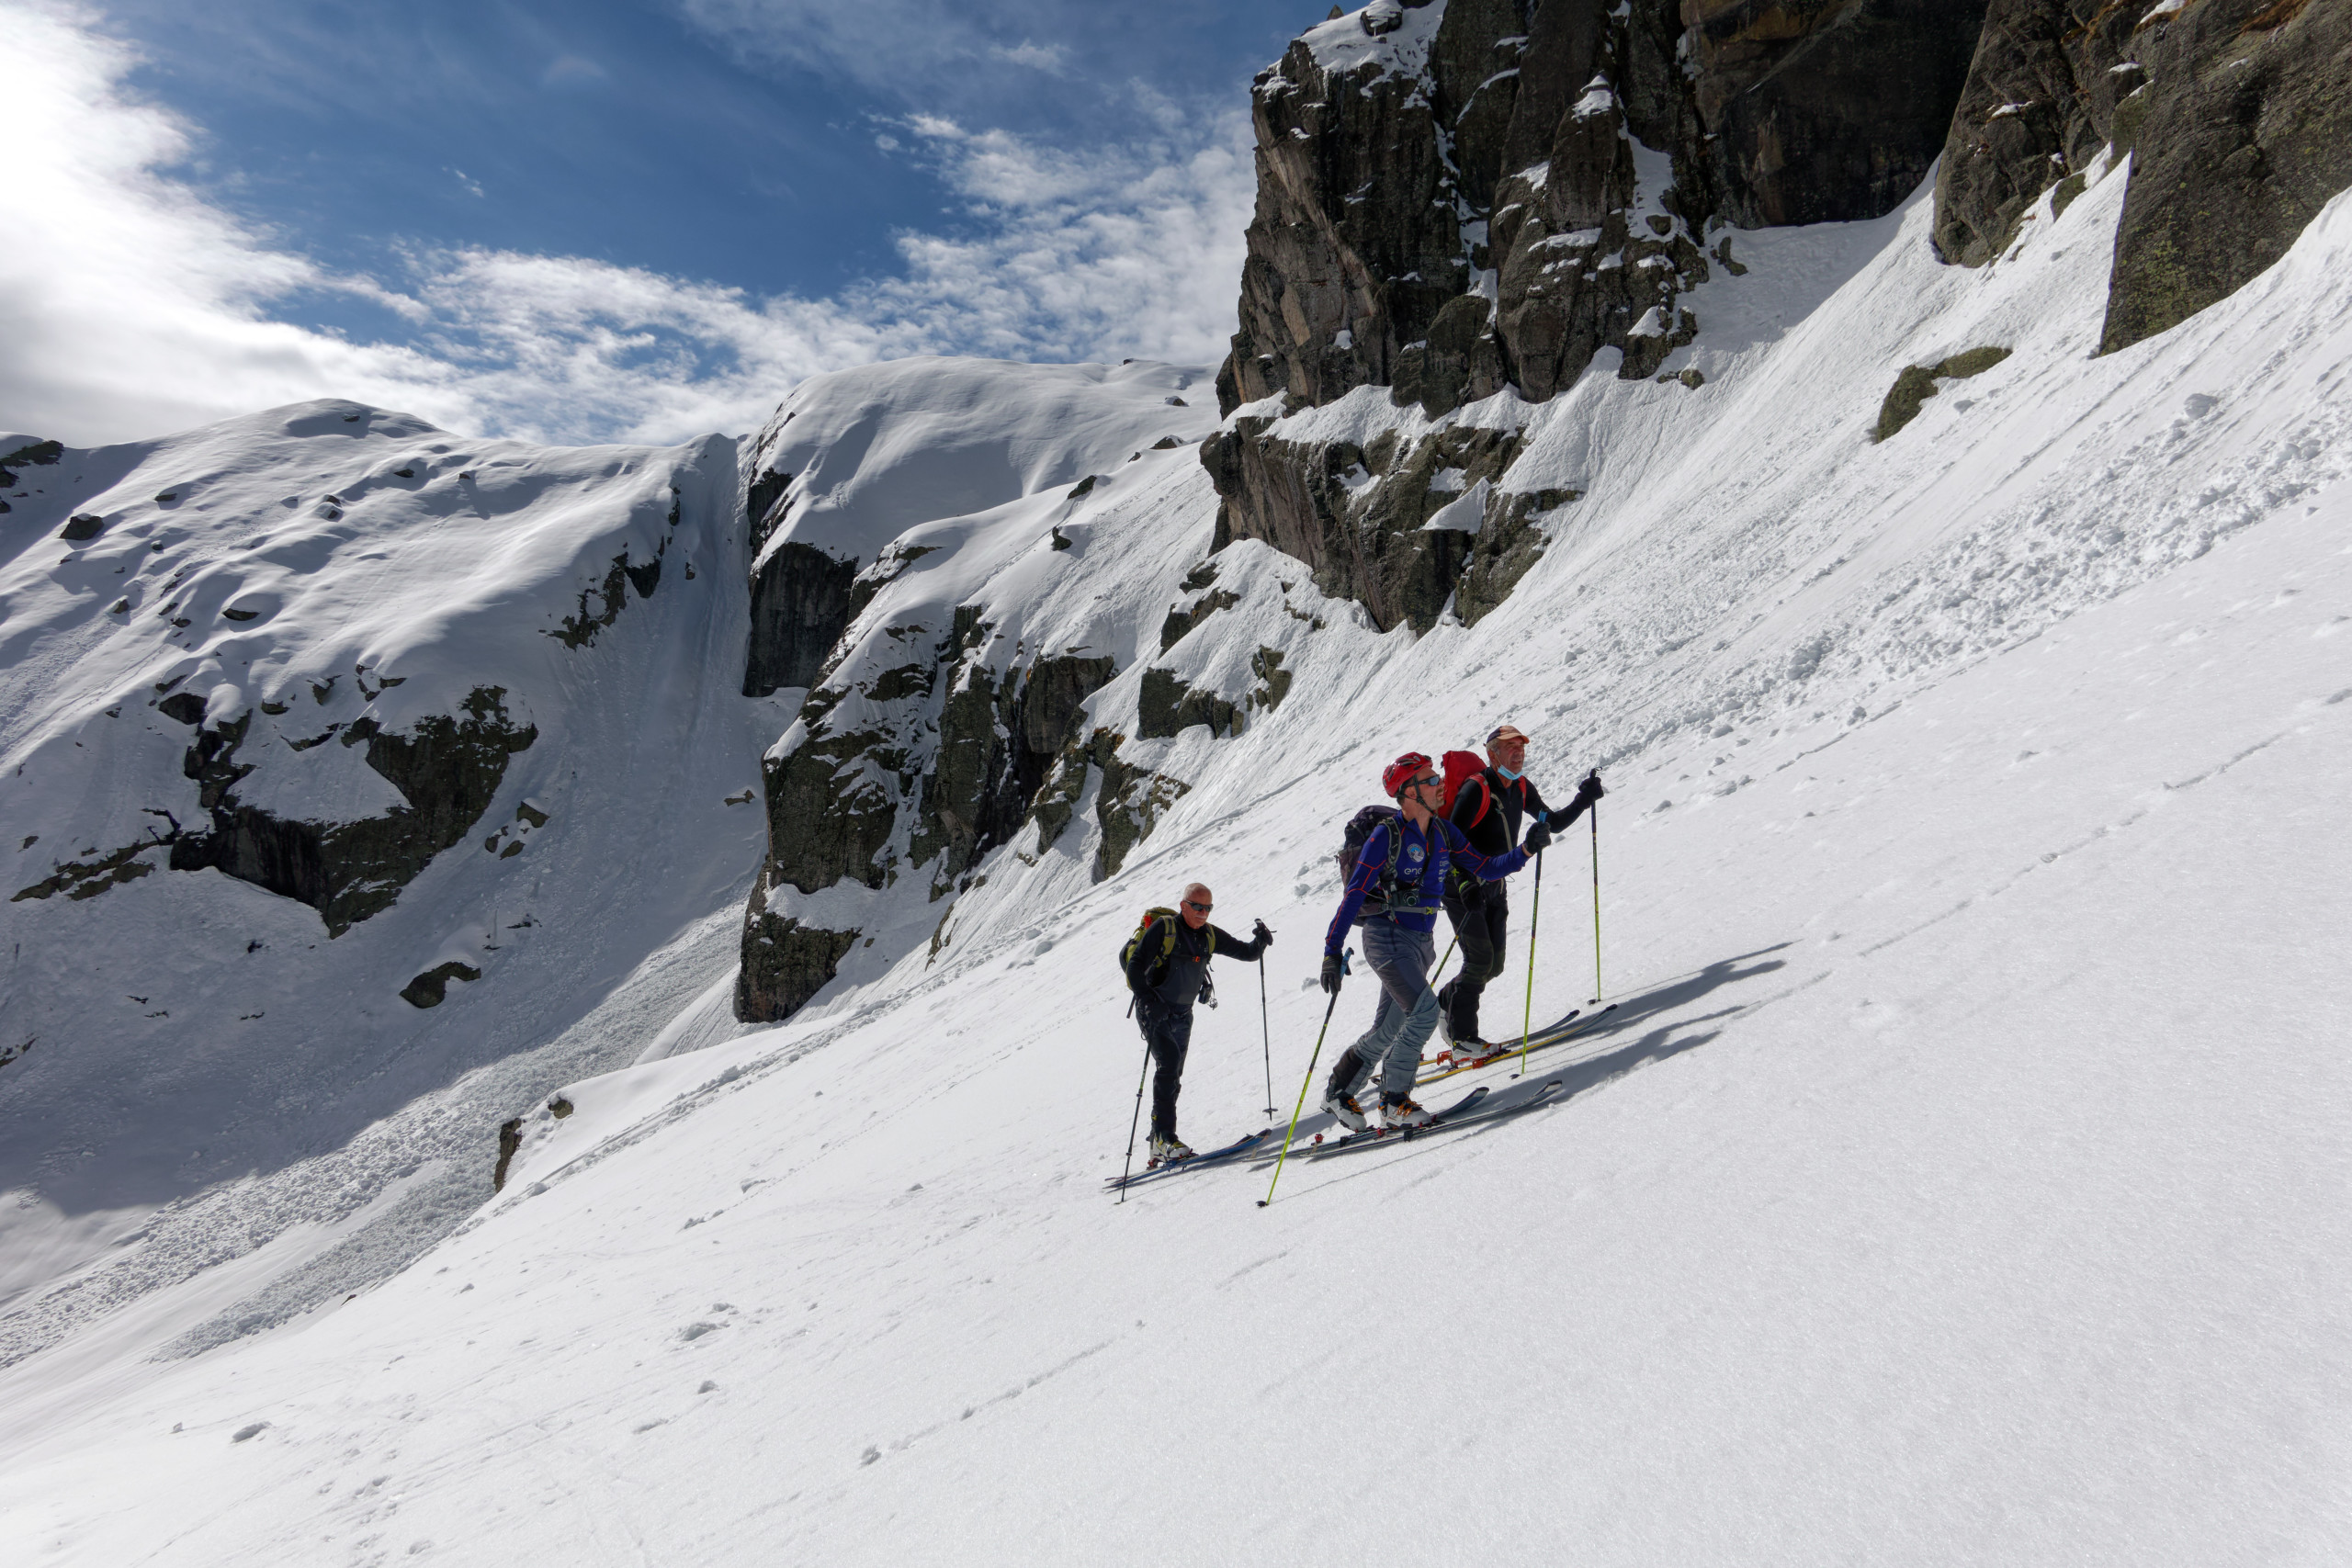 Scialpinismo al Torrione di Mezzaluna, Quasi in cresta